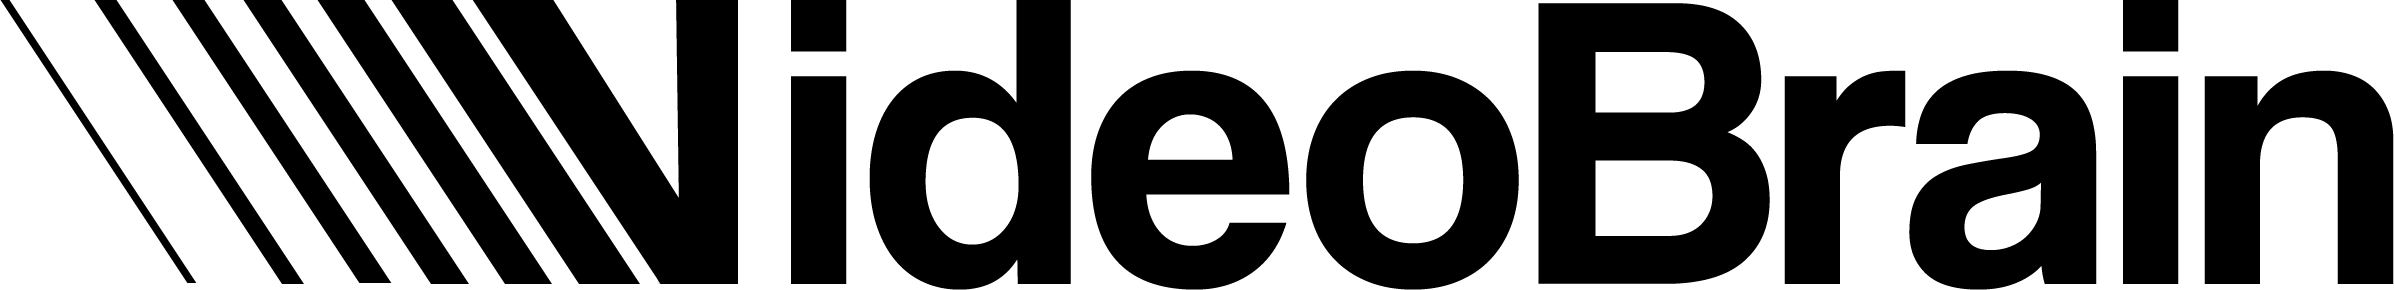 VideoBrain Family Computer - Logo.png